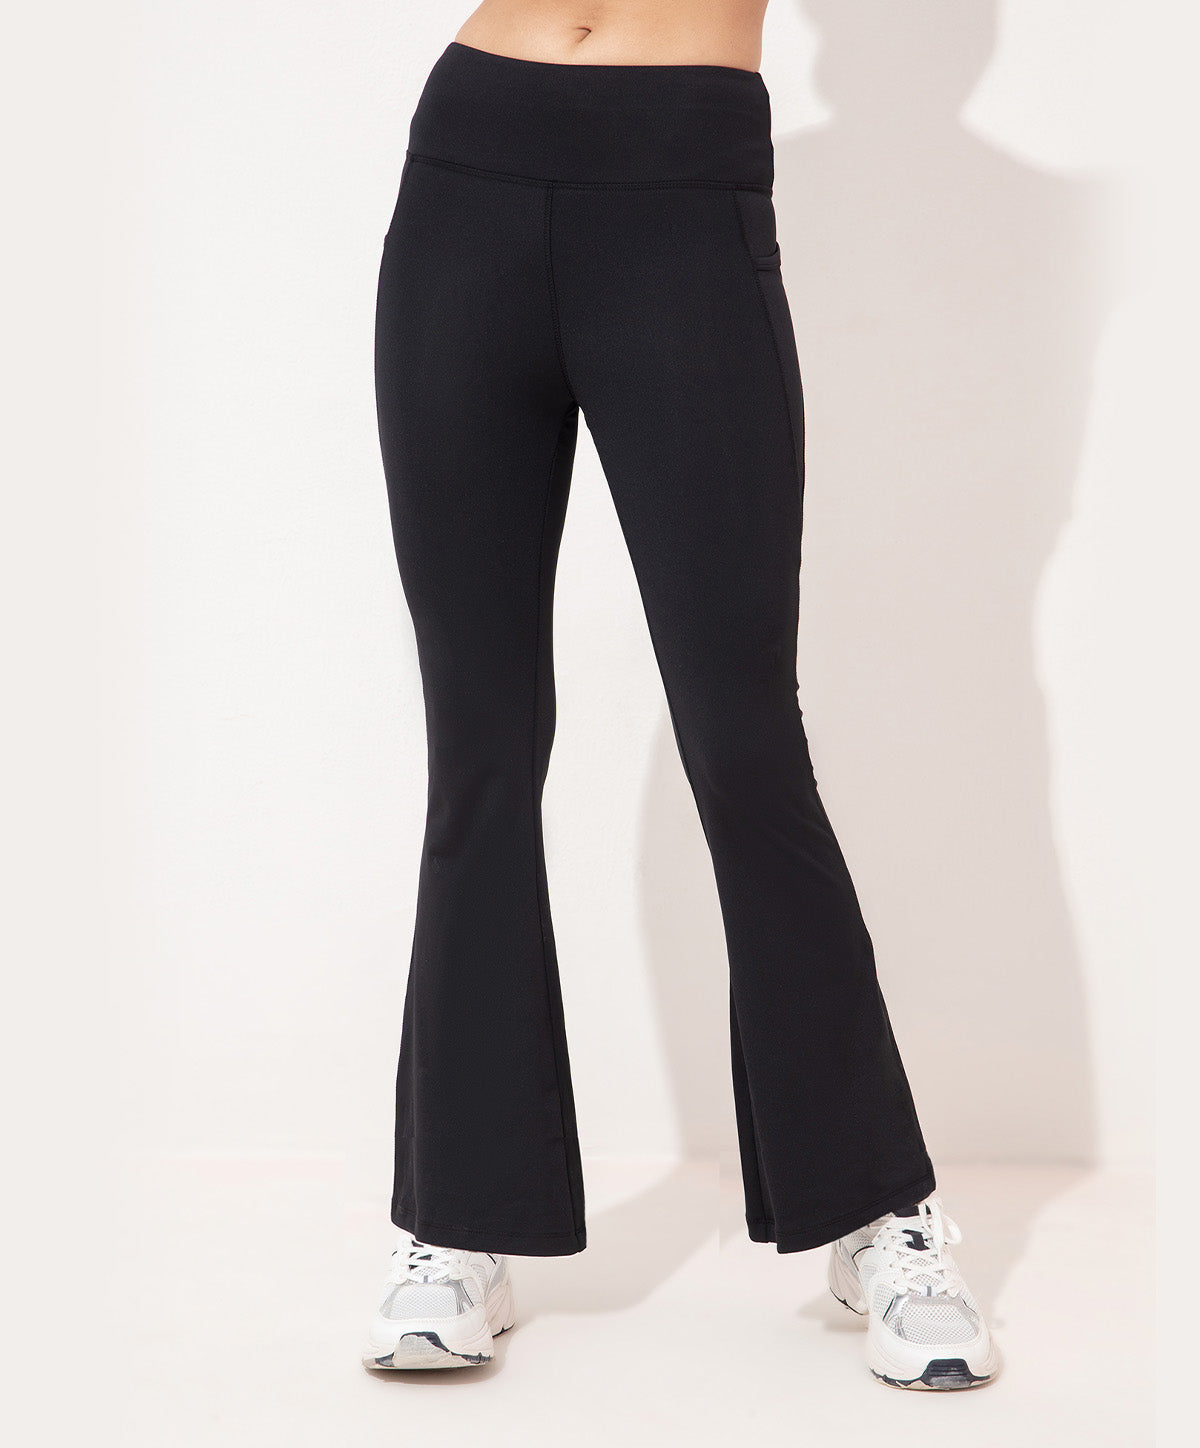 Women's Casual Yoga Pants V High Waisted Flare Workout Pants